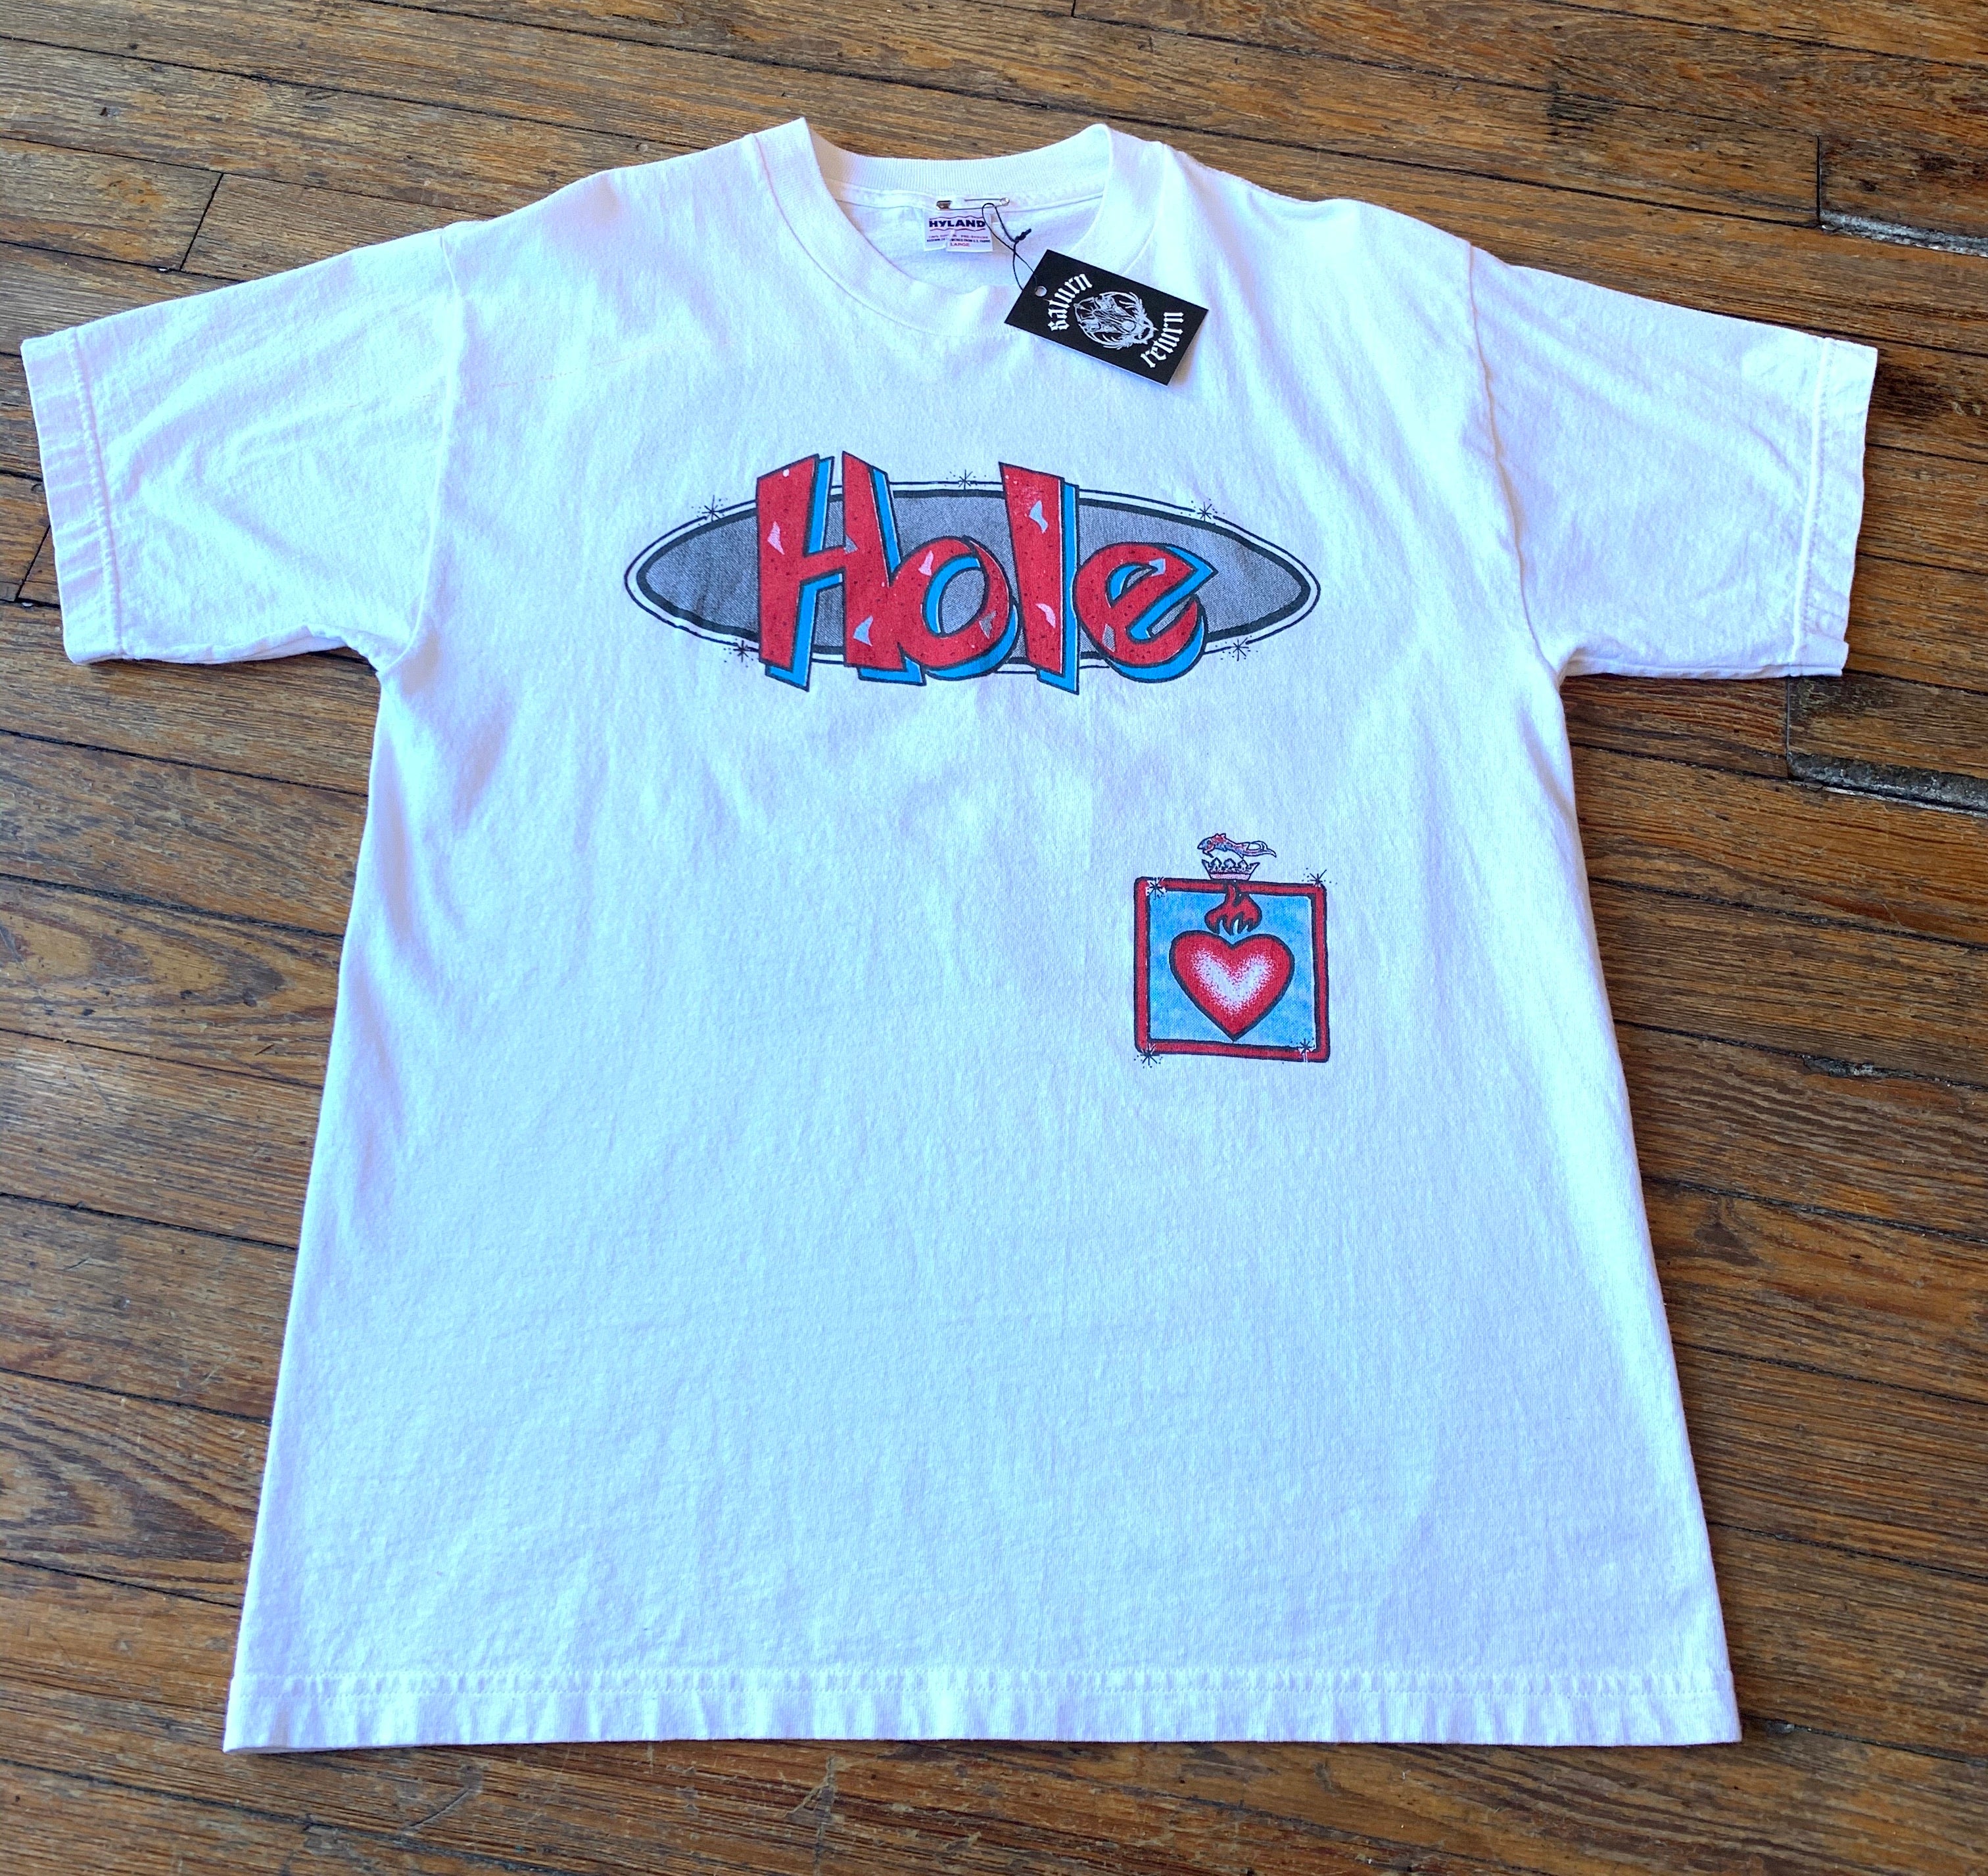 Vintage 90’s Hole Celebrity Skin Album T-Shirt